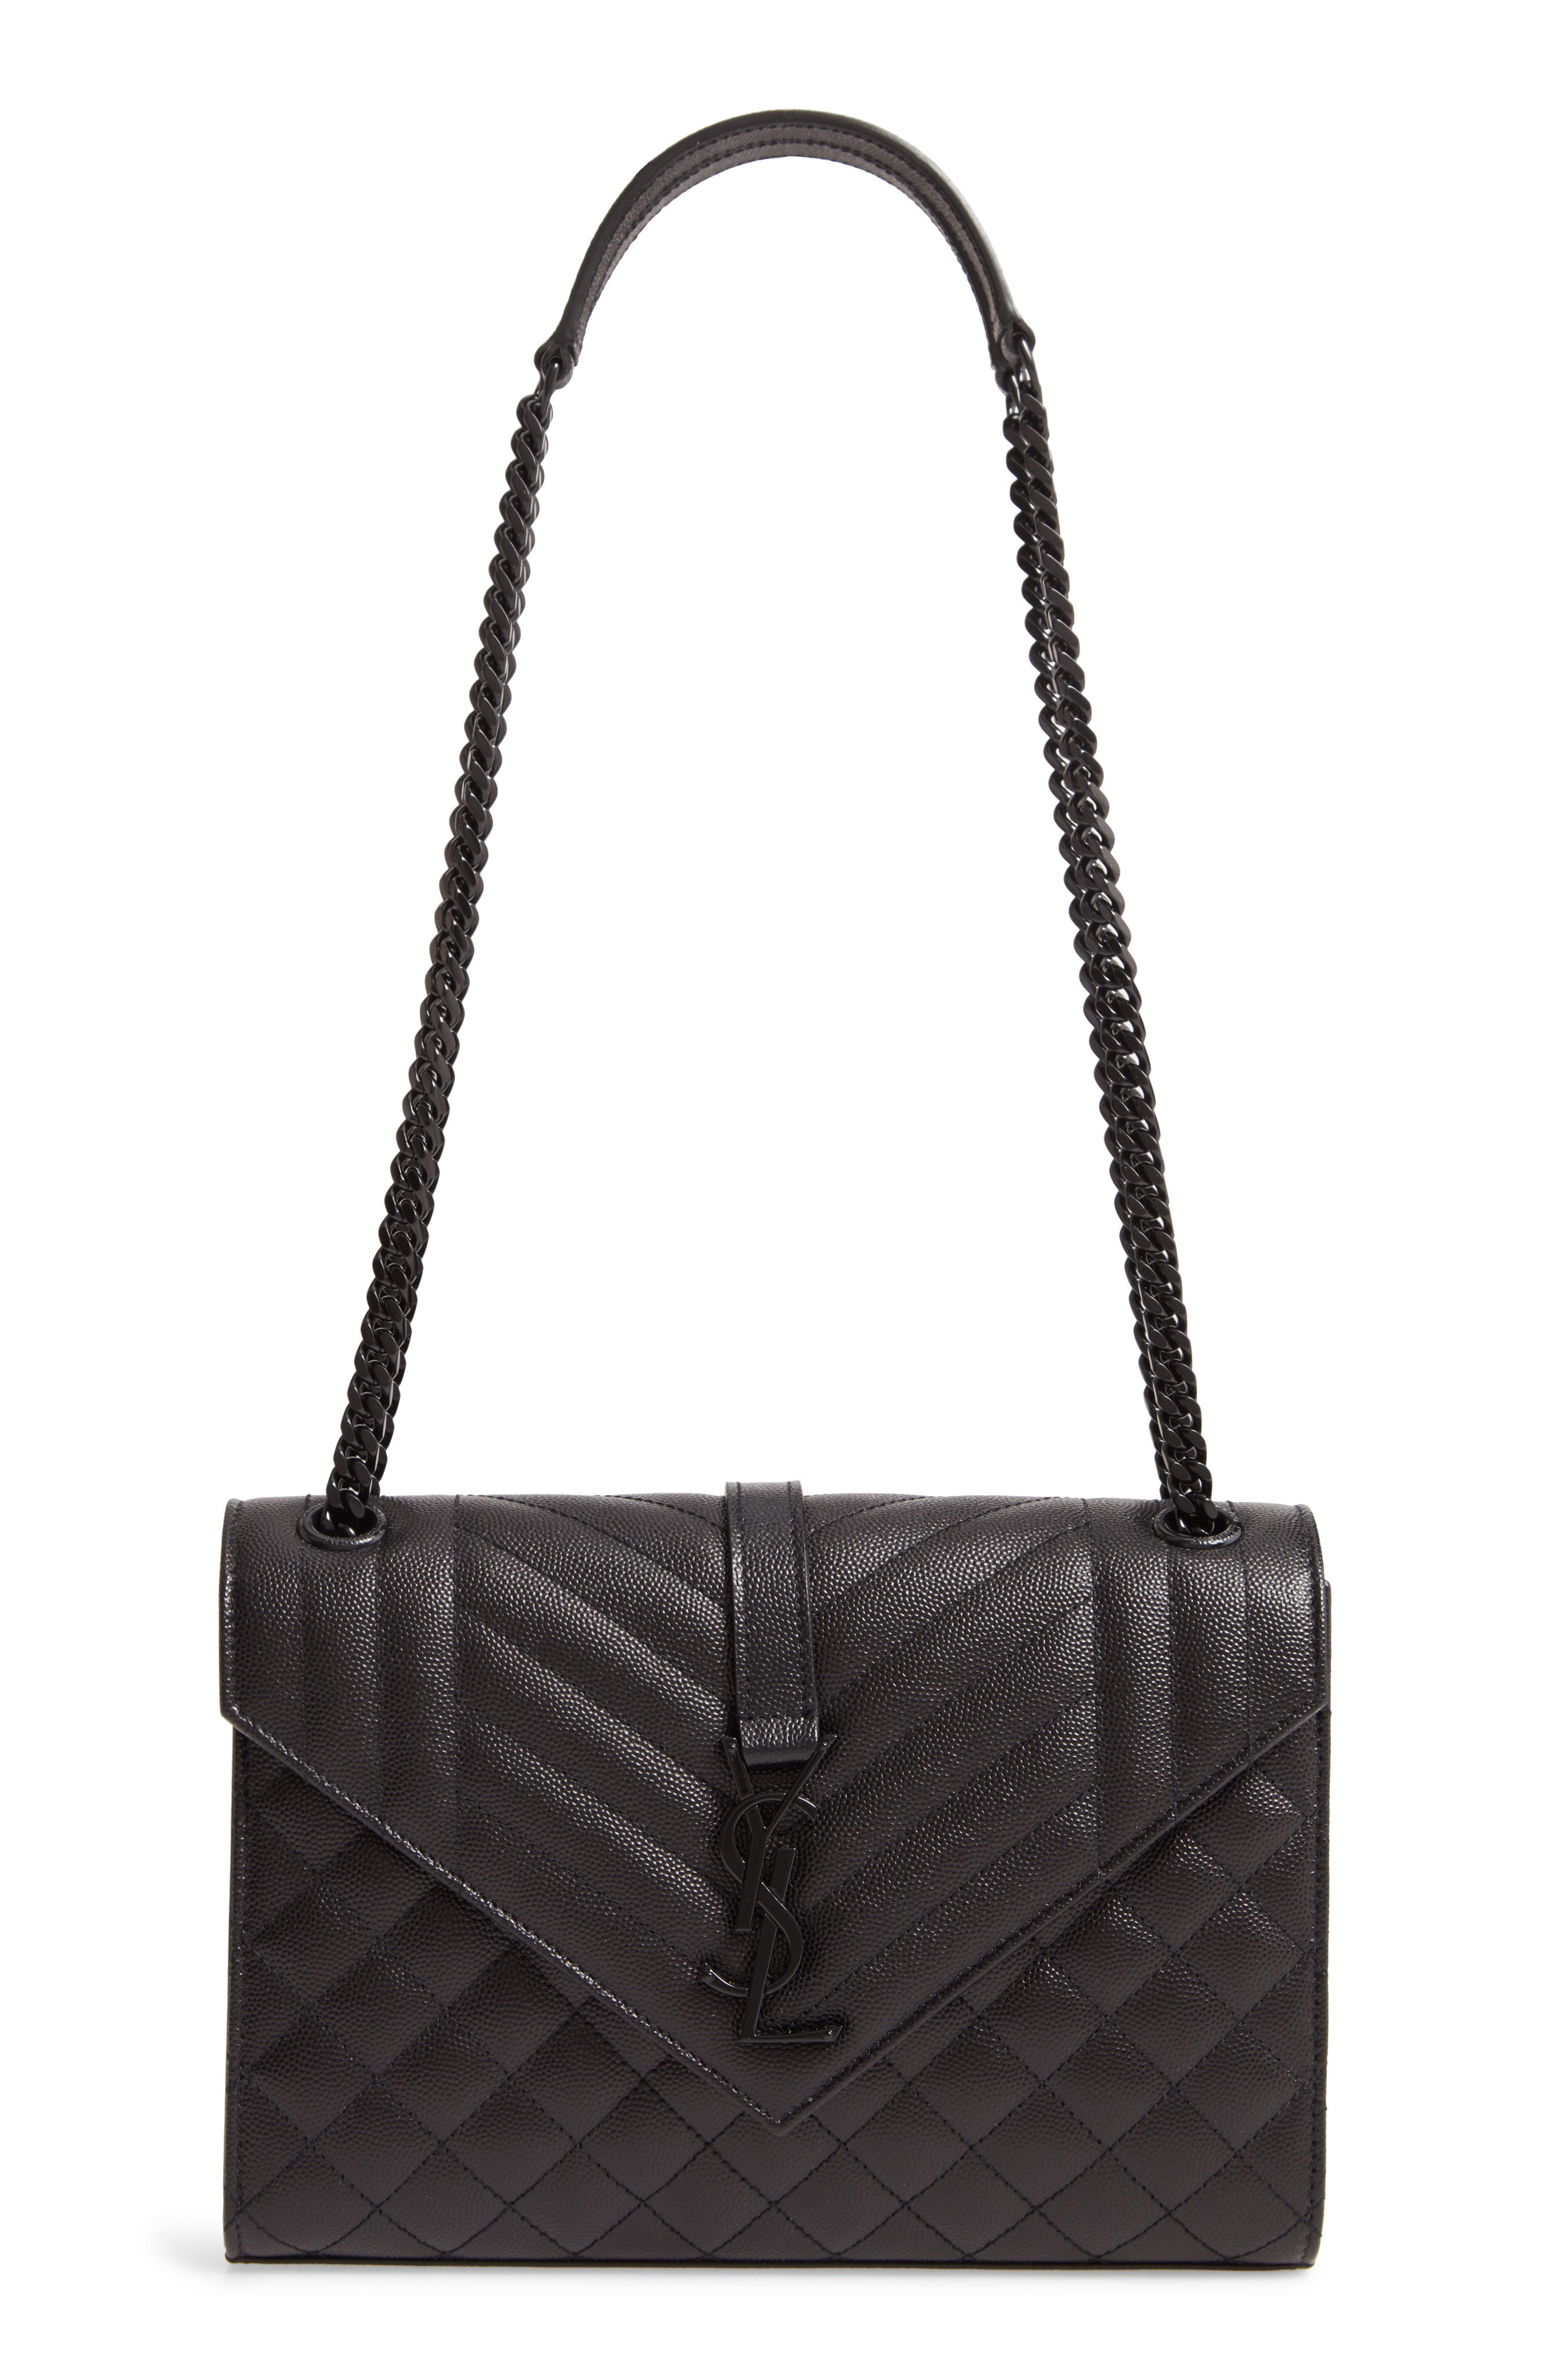 Saint Laurent black quilted leather clutch bag